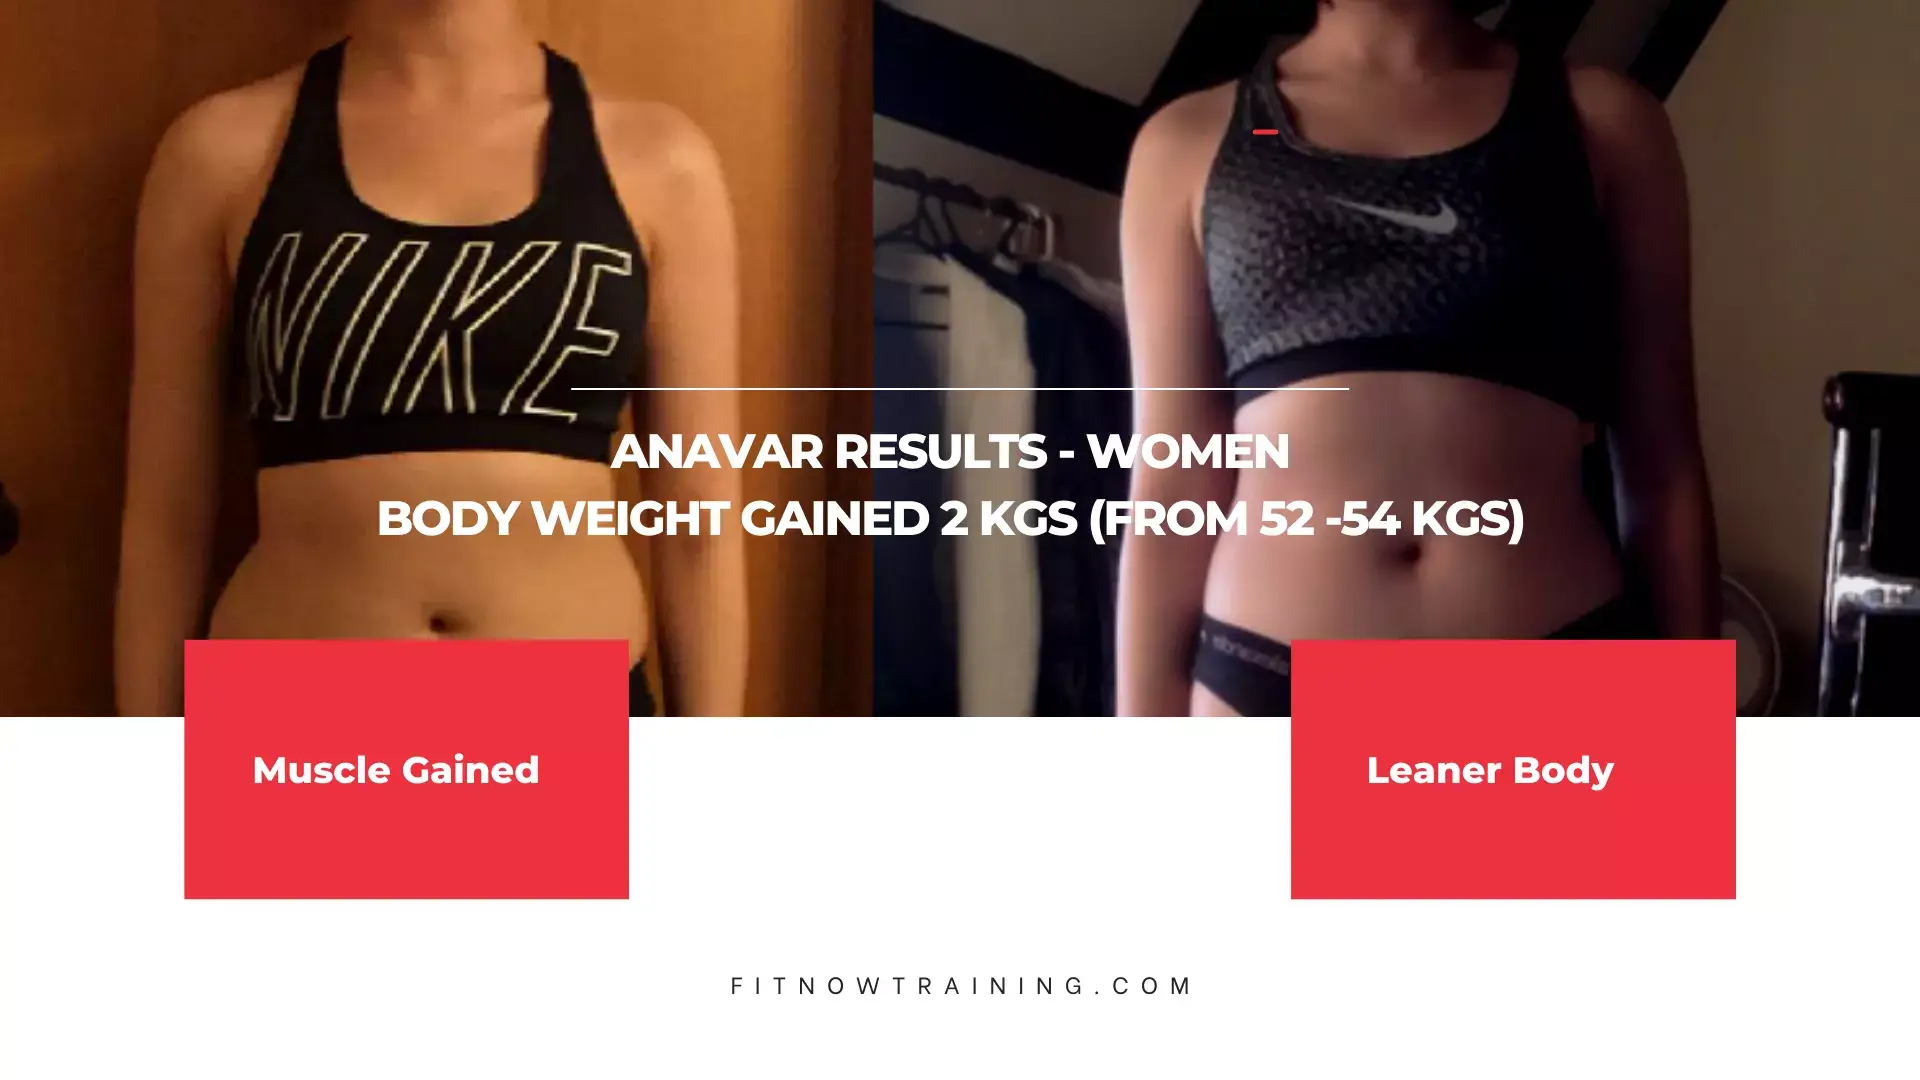 Anavar results